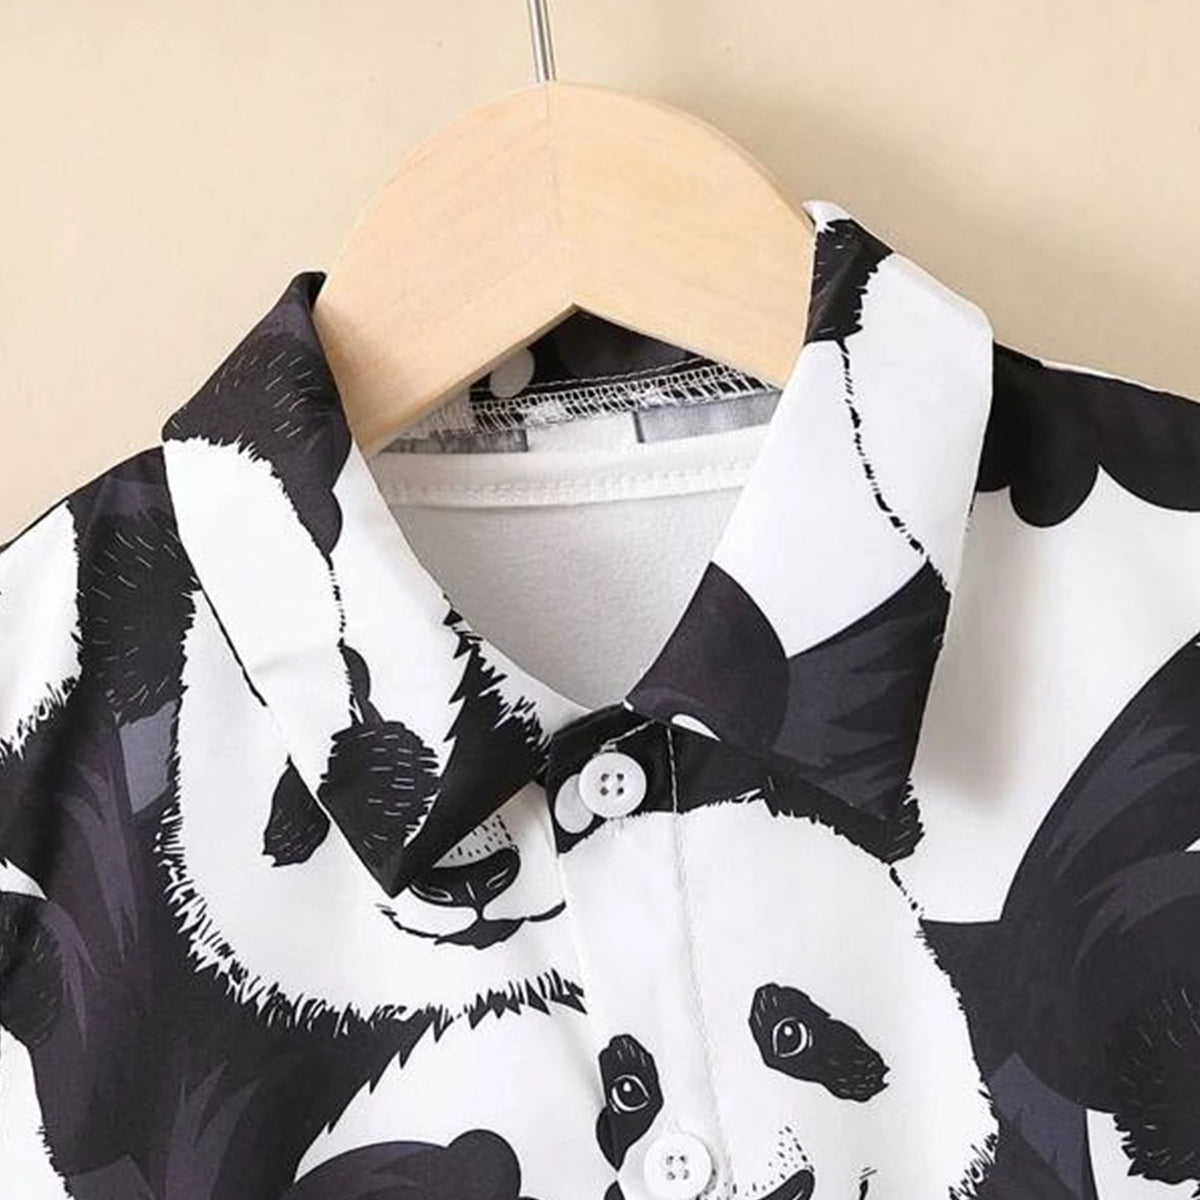 Venutaloza Kids Black & White Cartoon Panda Print Turn Down Collar Shirt & Shorts Without tee Two Piece Set.